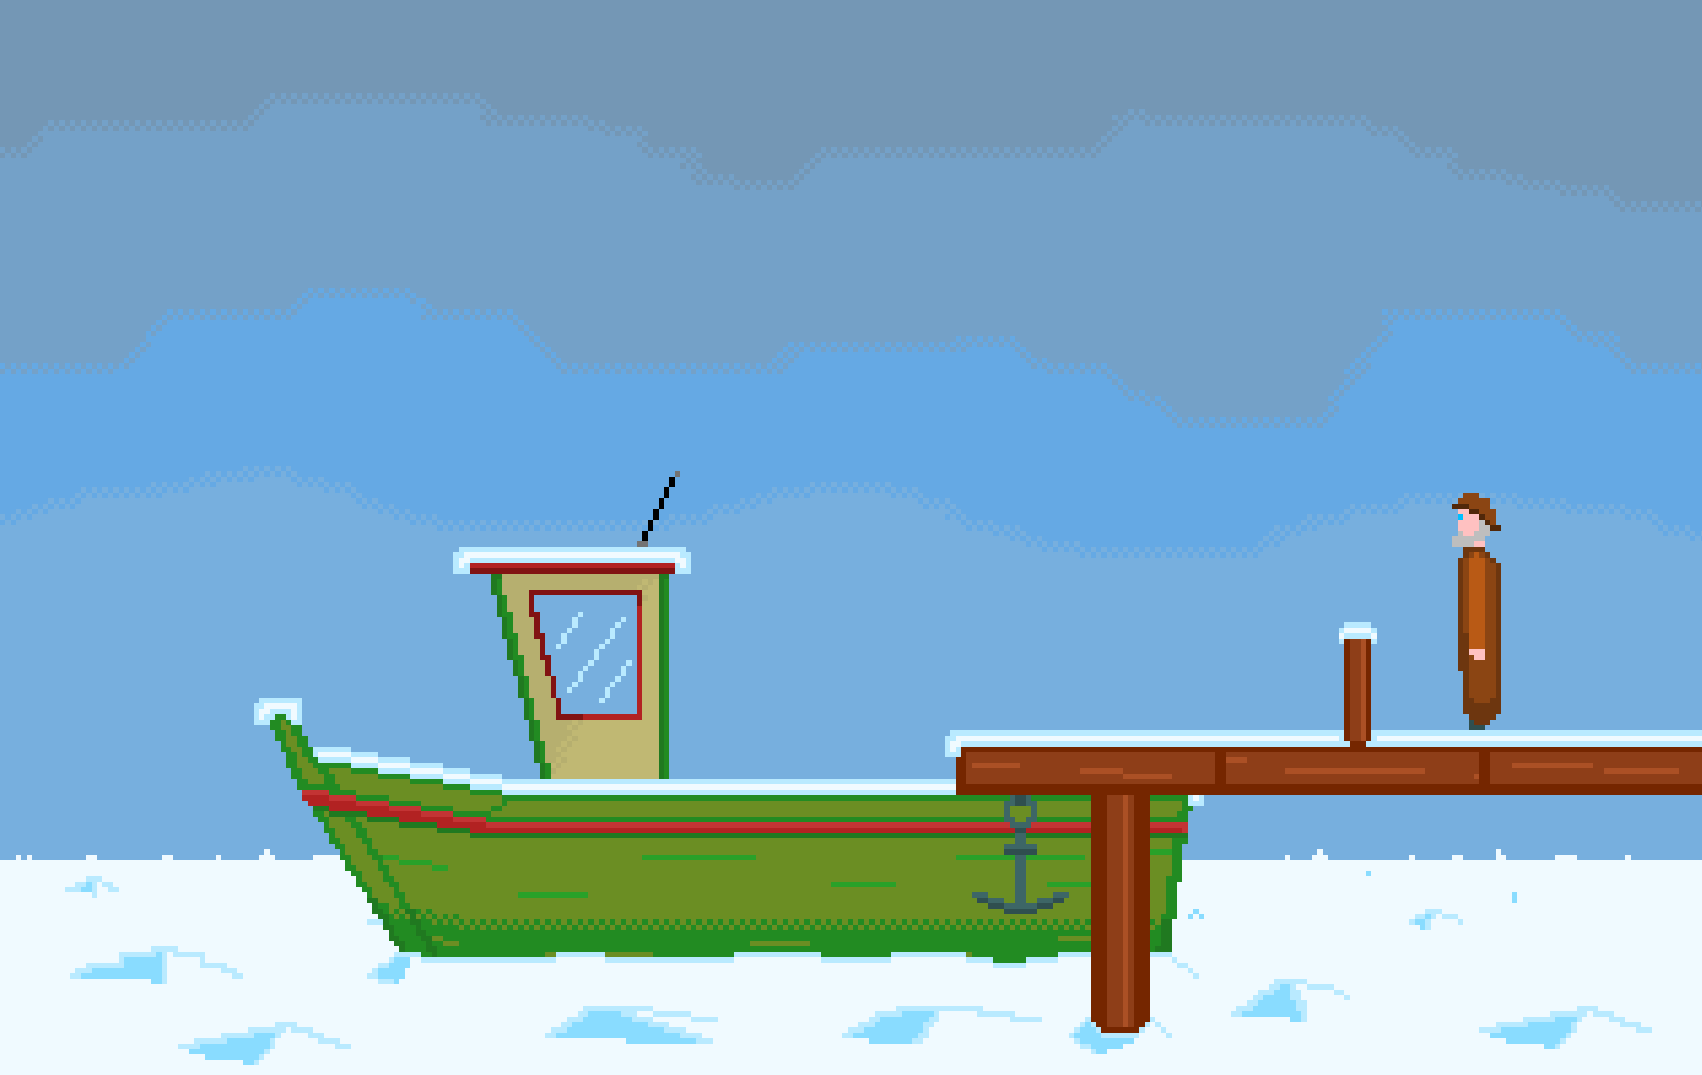 Screenshot 3 of The Frozen Shore width=